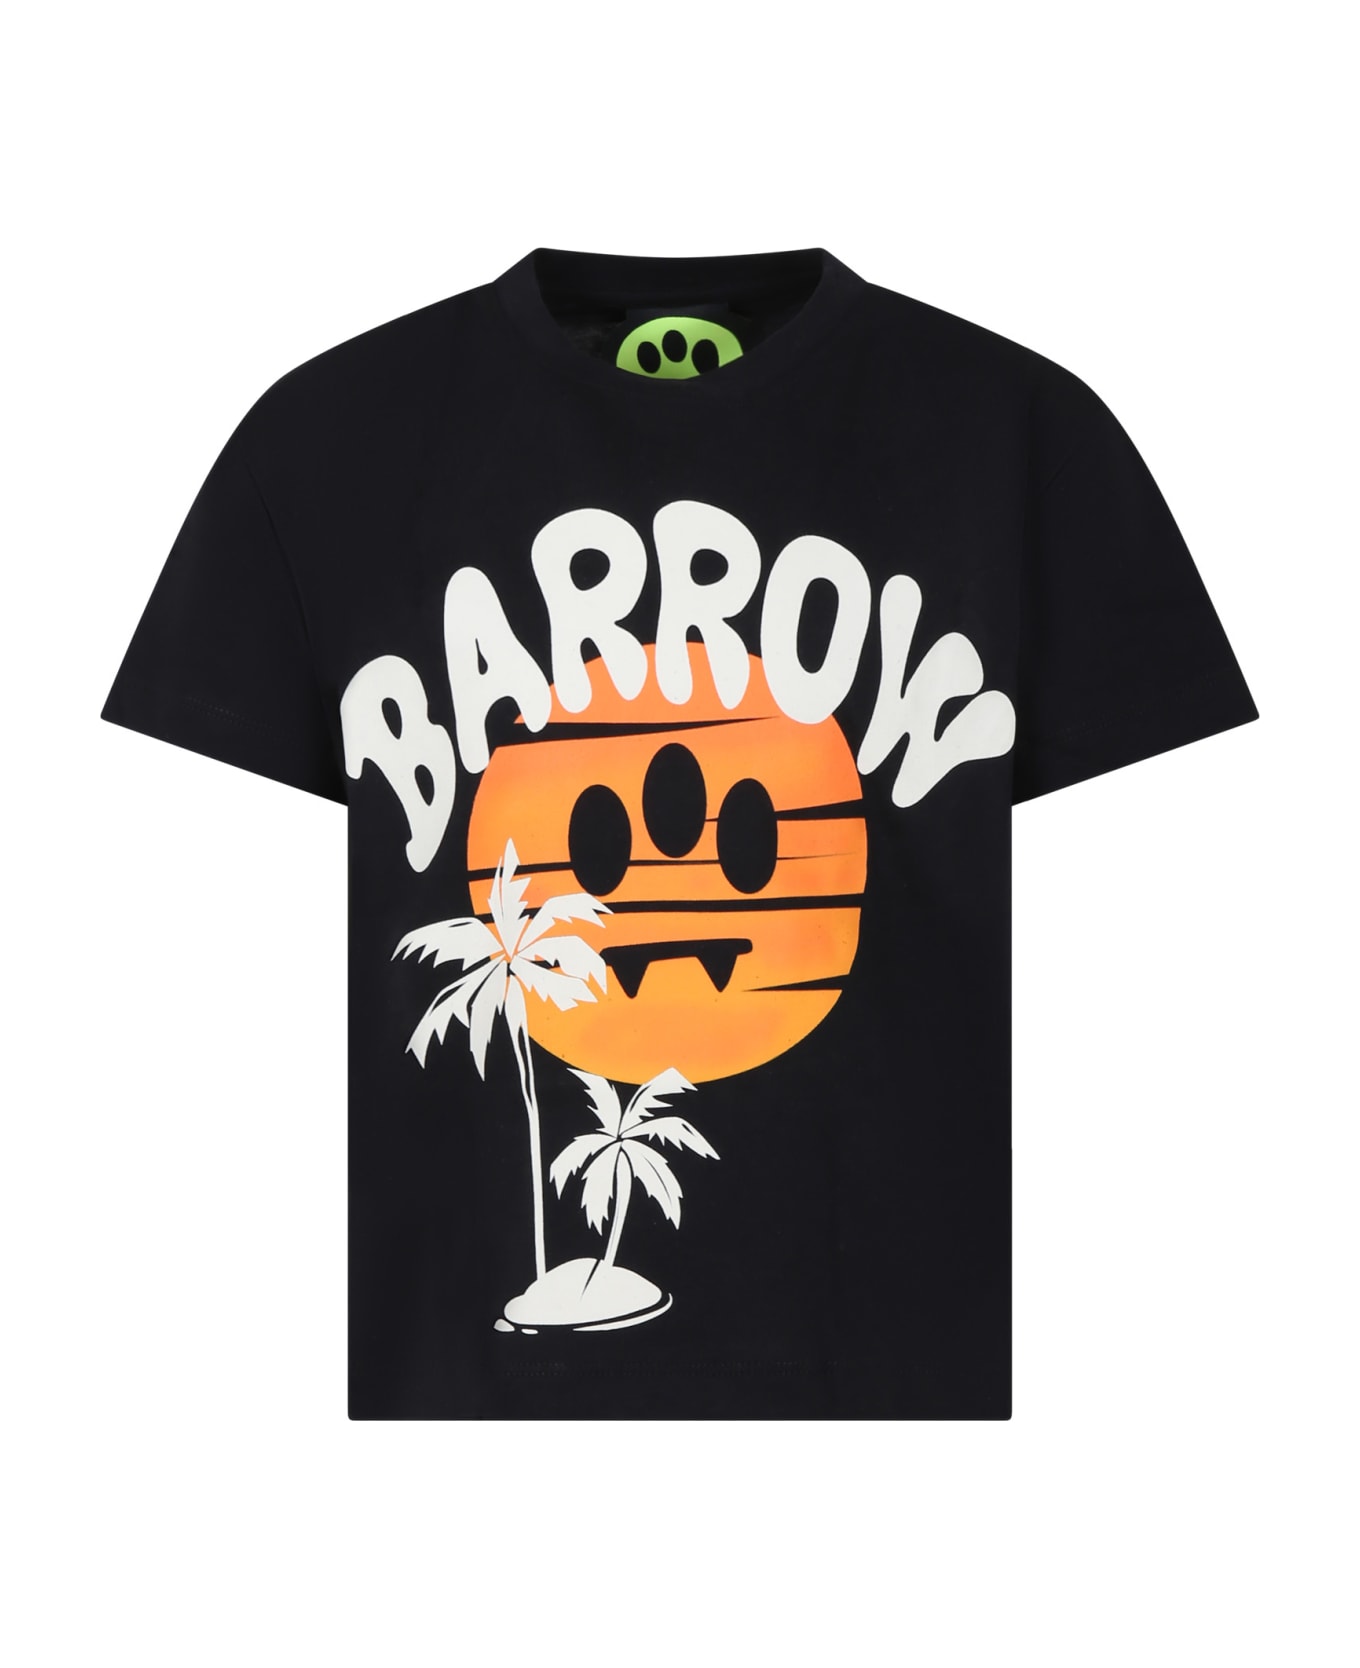 Barrow Black T-shirt For Boy With Logo - Nero/Black